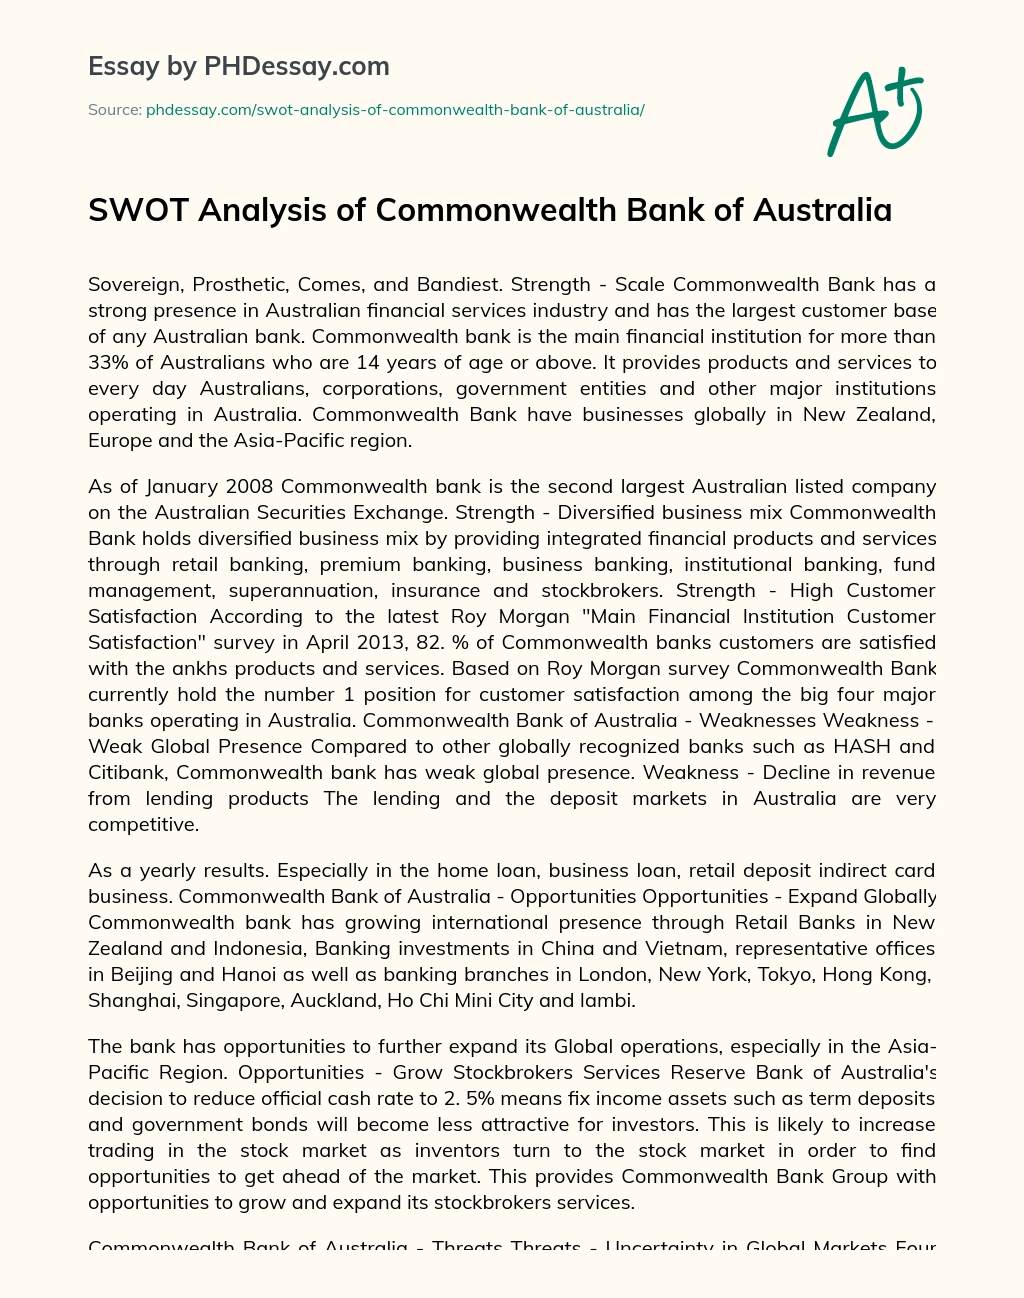 SWOT Analysis of Commonwealth Bank of Australia essay